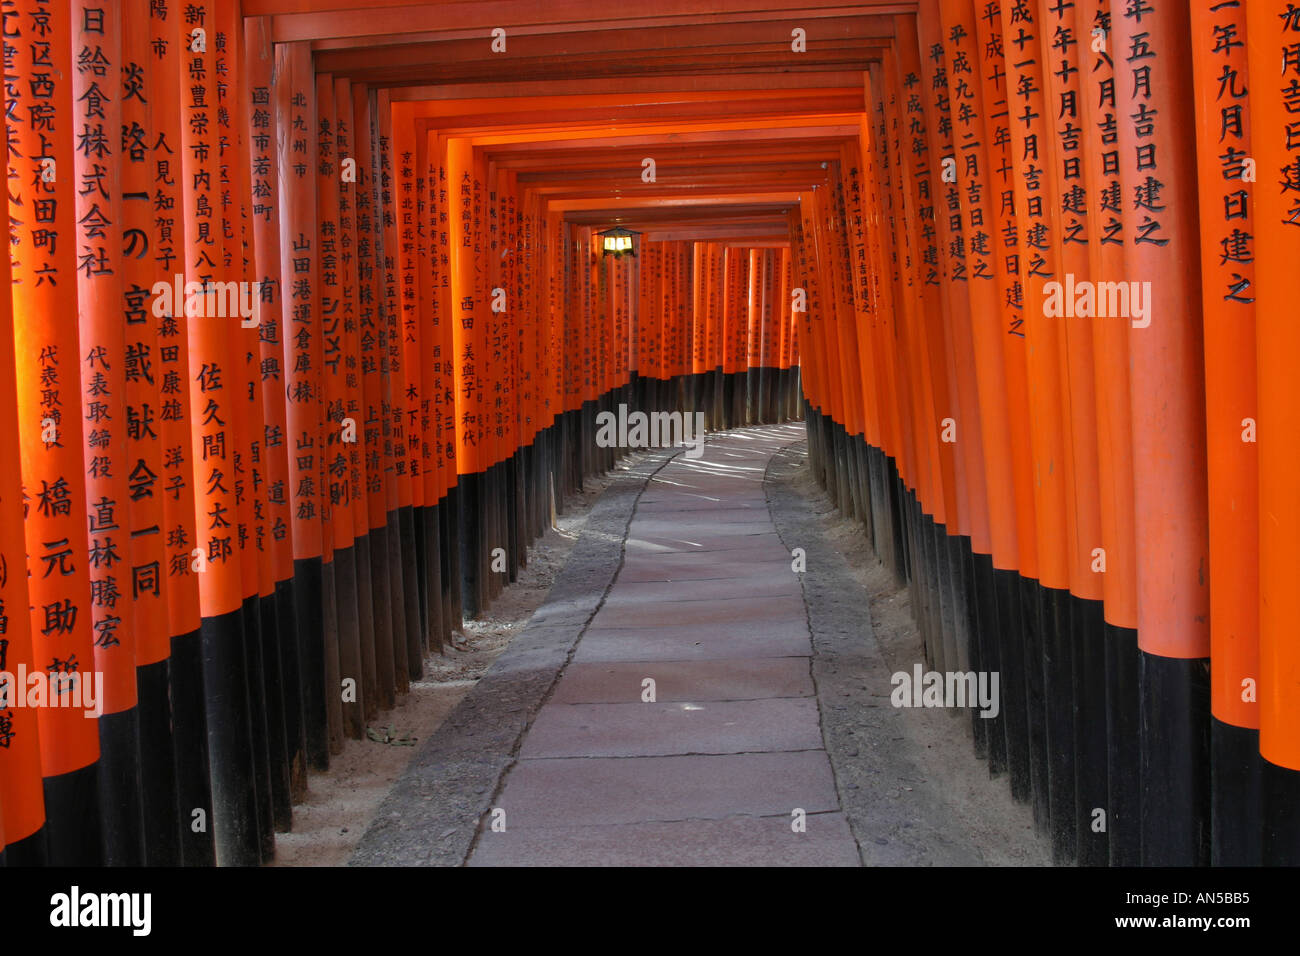 Tourist attraction in Kyoto Tori gates at Fushimi Inari Taisha shrine in Japan Asia scene set of Memoirs of a Geisha movie film Stock Photo